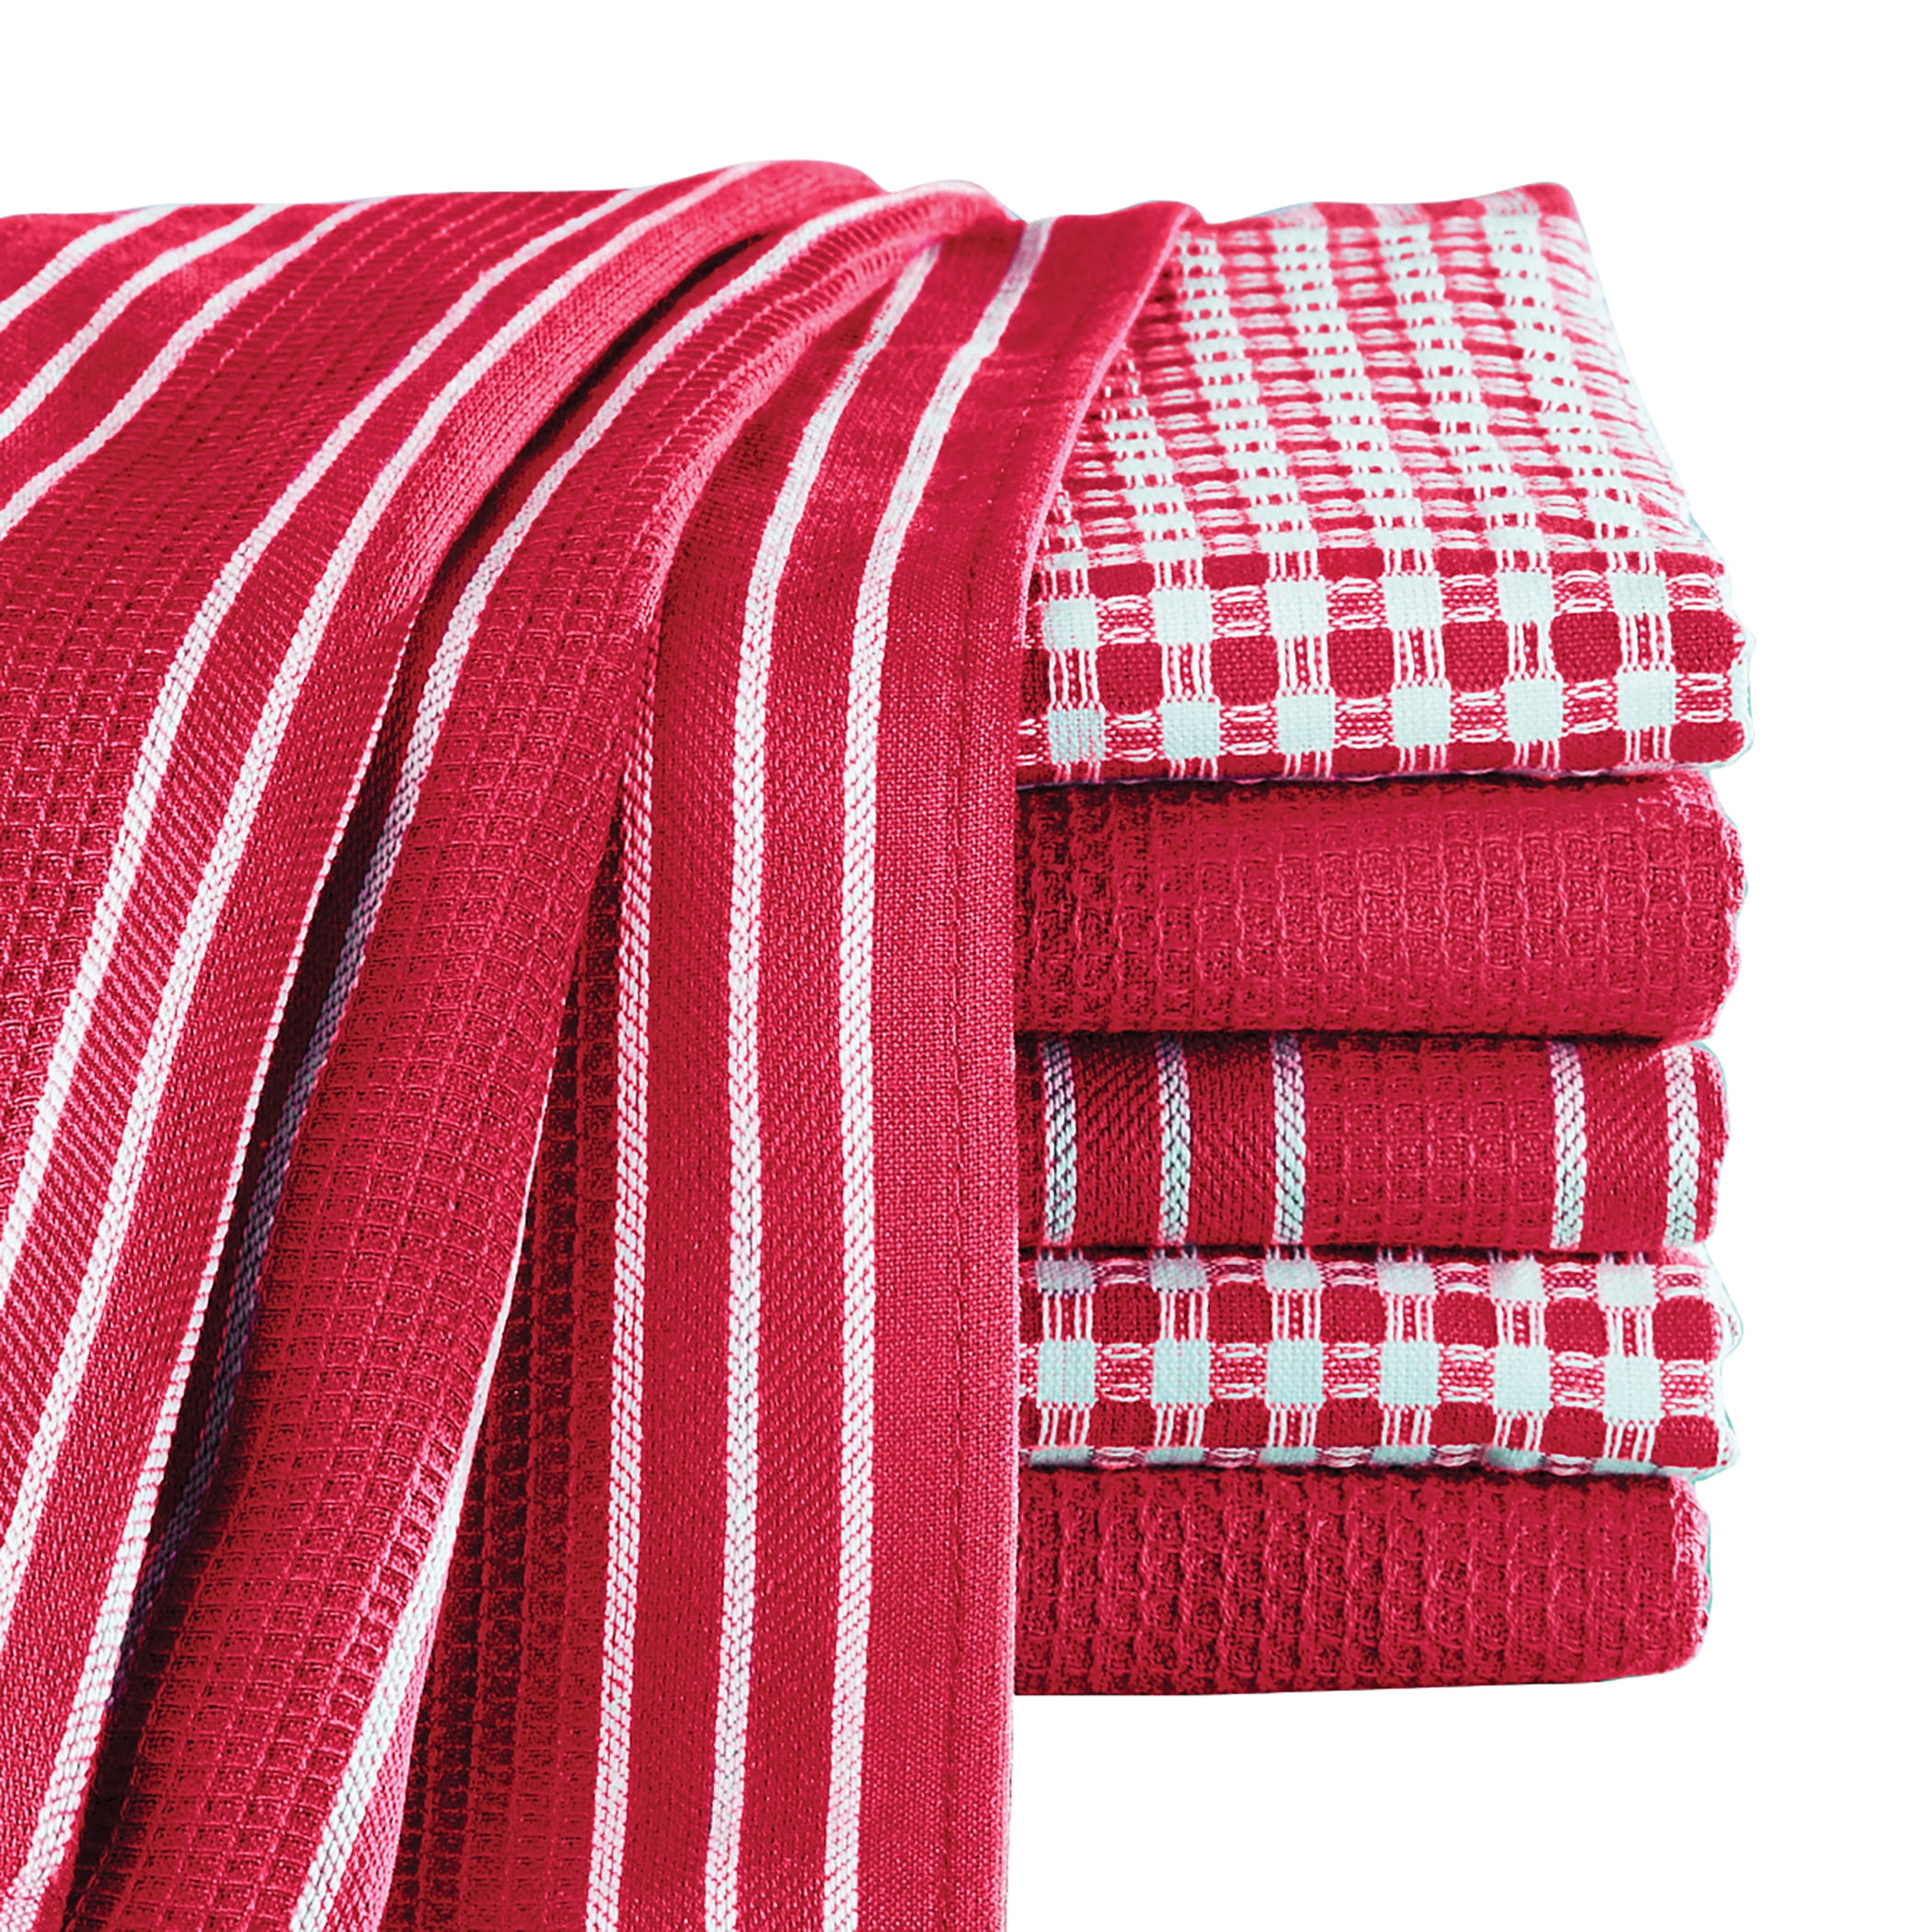 12 new burgundy salon towels dobby premium ringspun hand towels 15x25 4 lb 